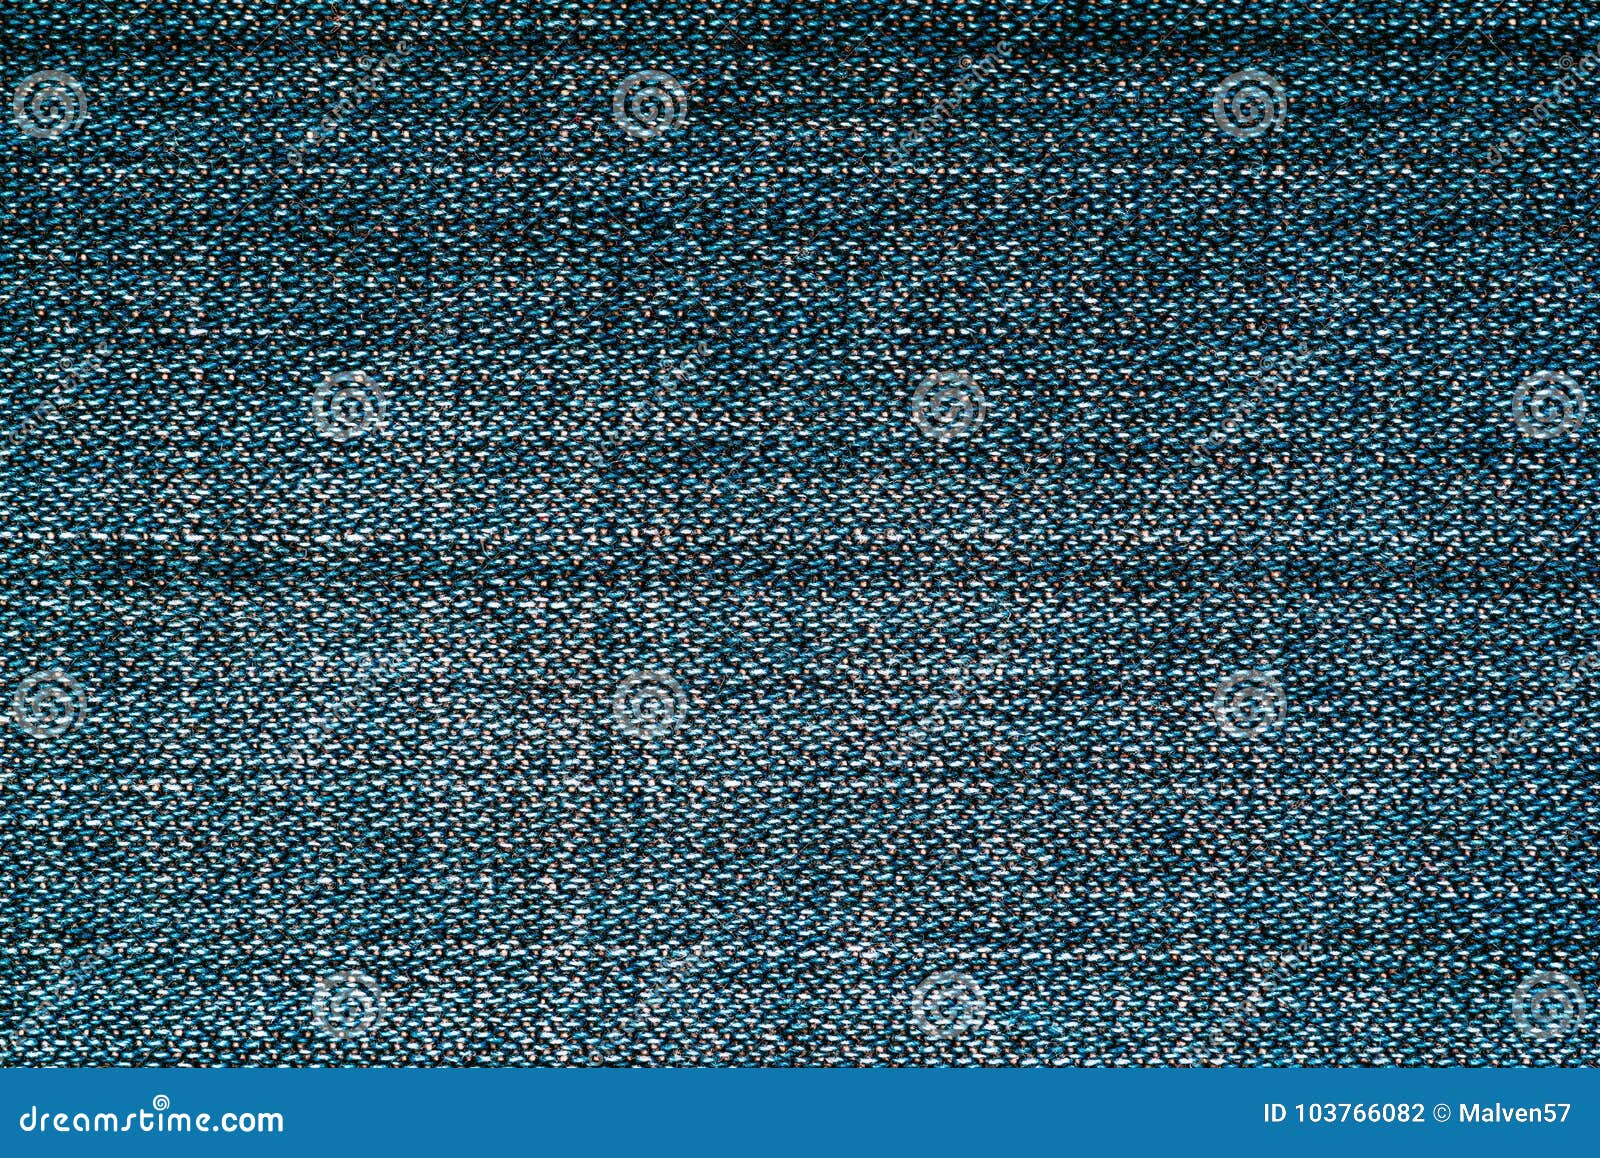 Texture of denim stock photo. Image of wallpaper, texture - 103766082